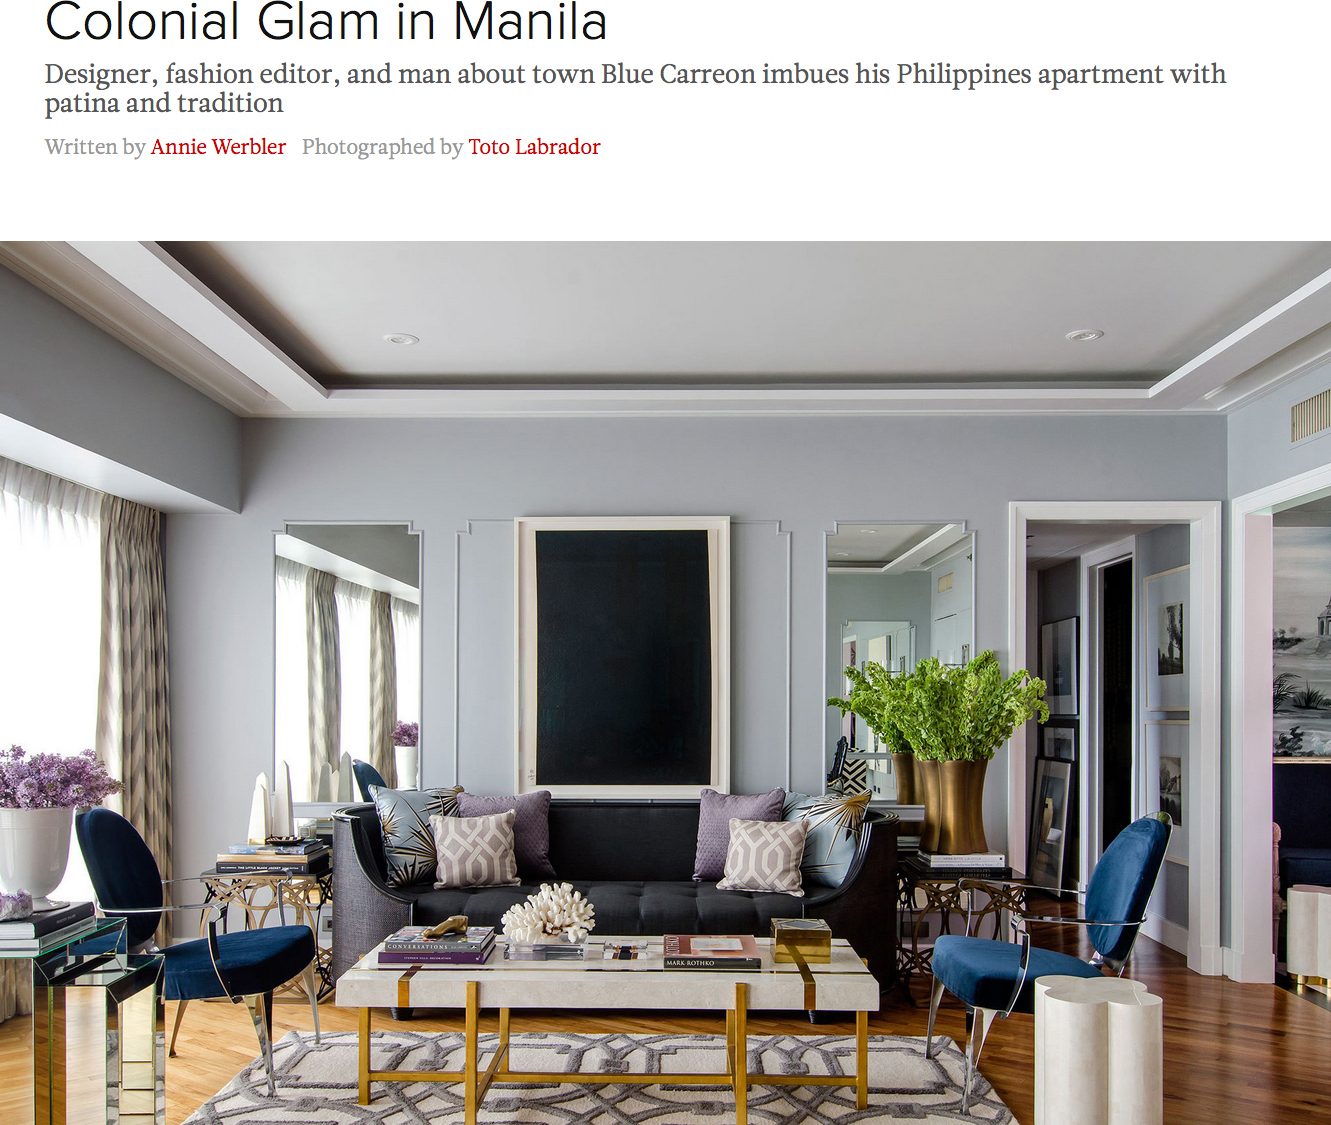   Colonial Glam in Manila     